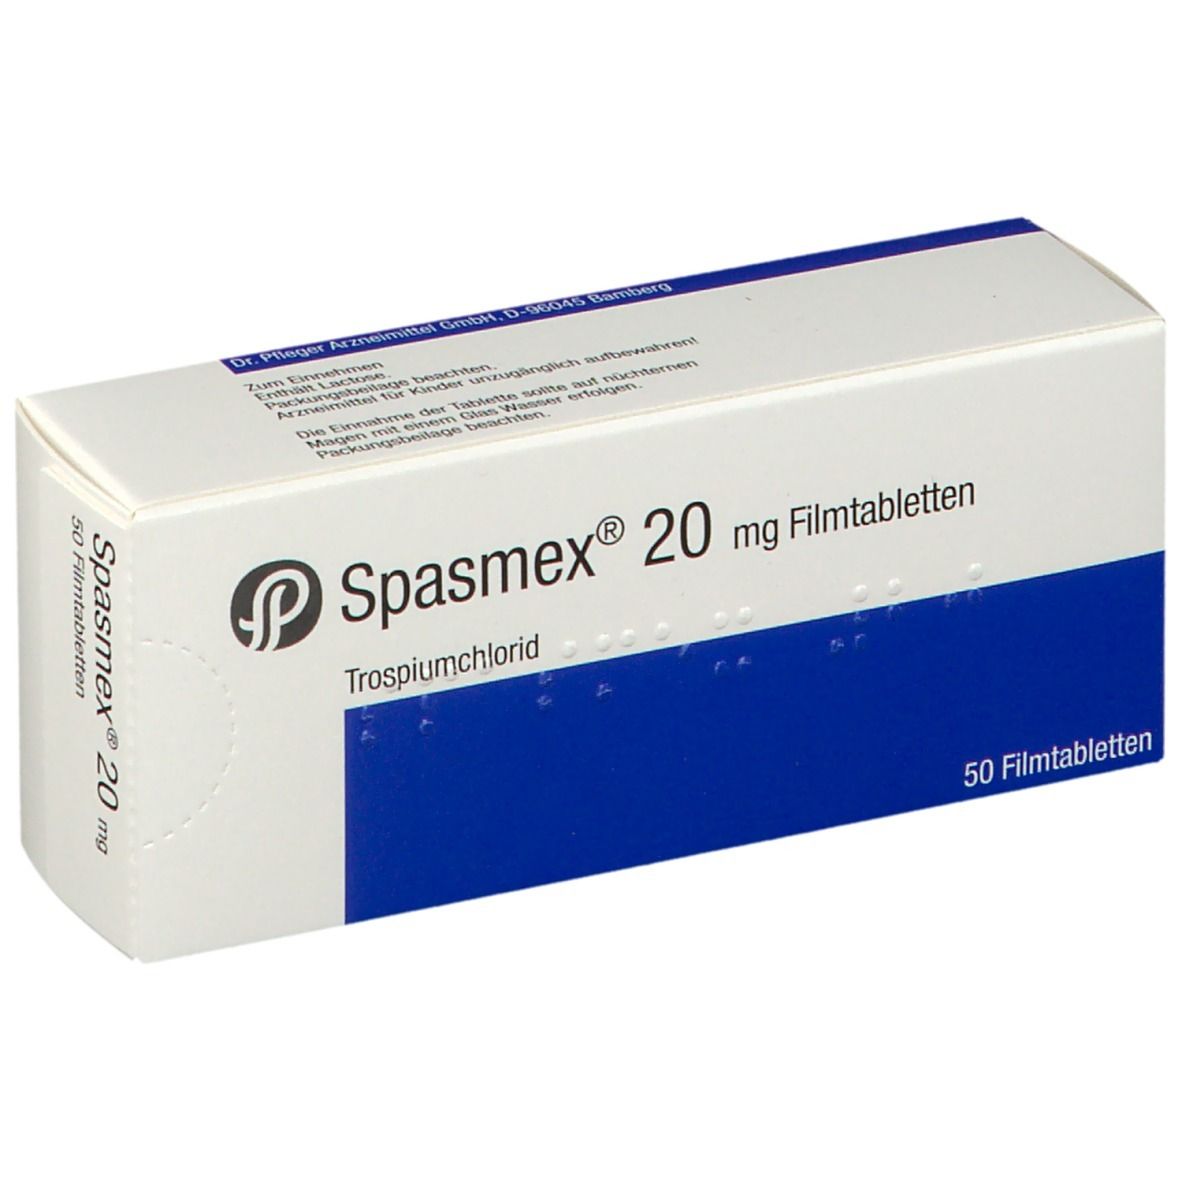 SPASMEX® 20 mg